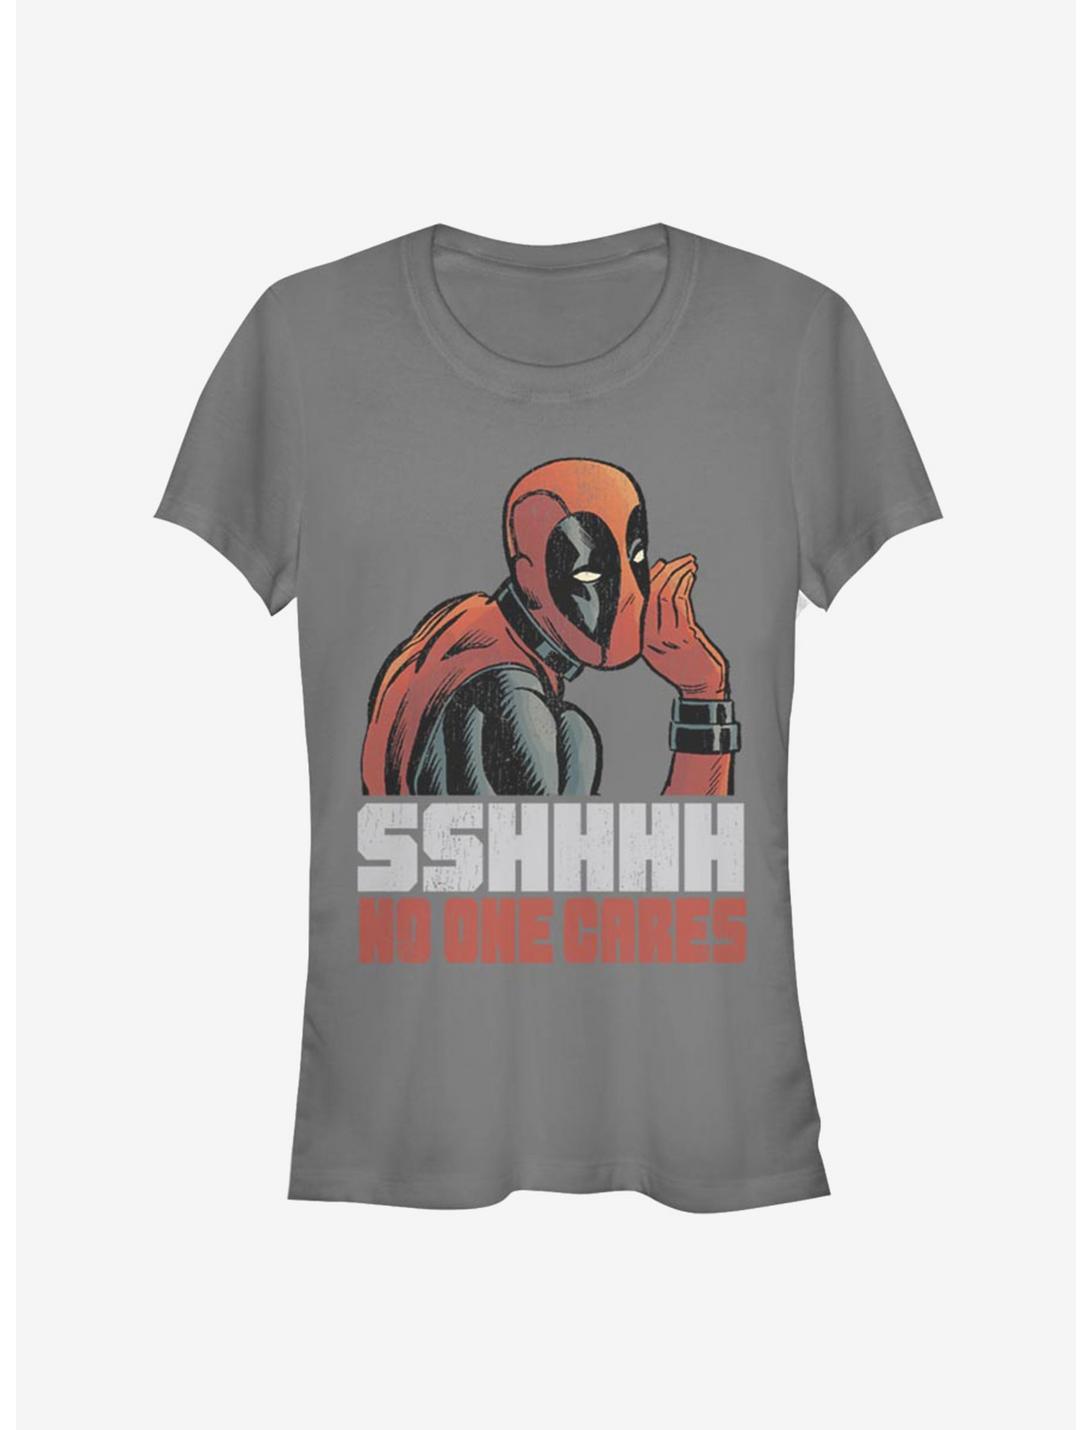 Marvel Deadpool No One Girls T-Shirt, , hi-res